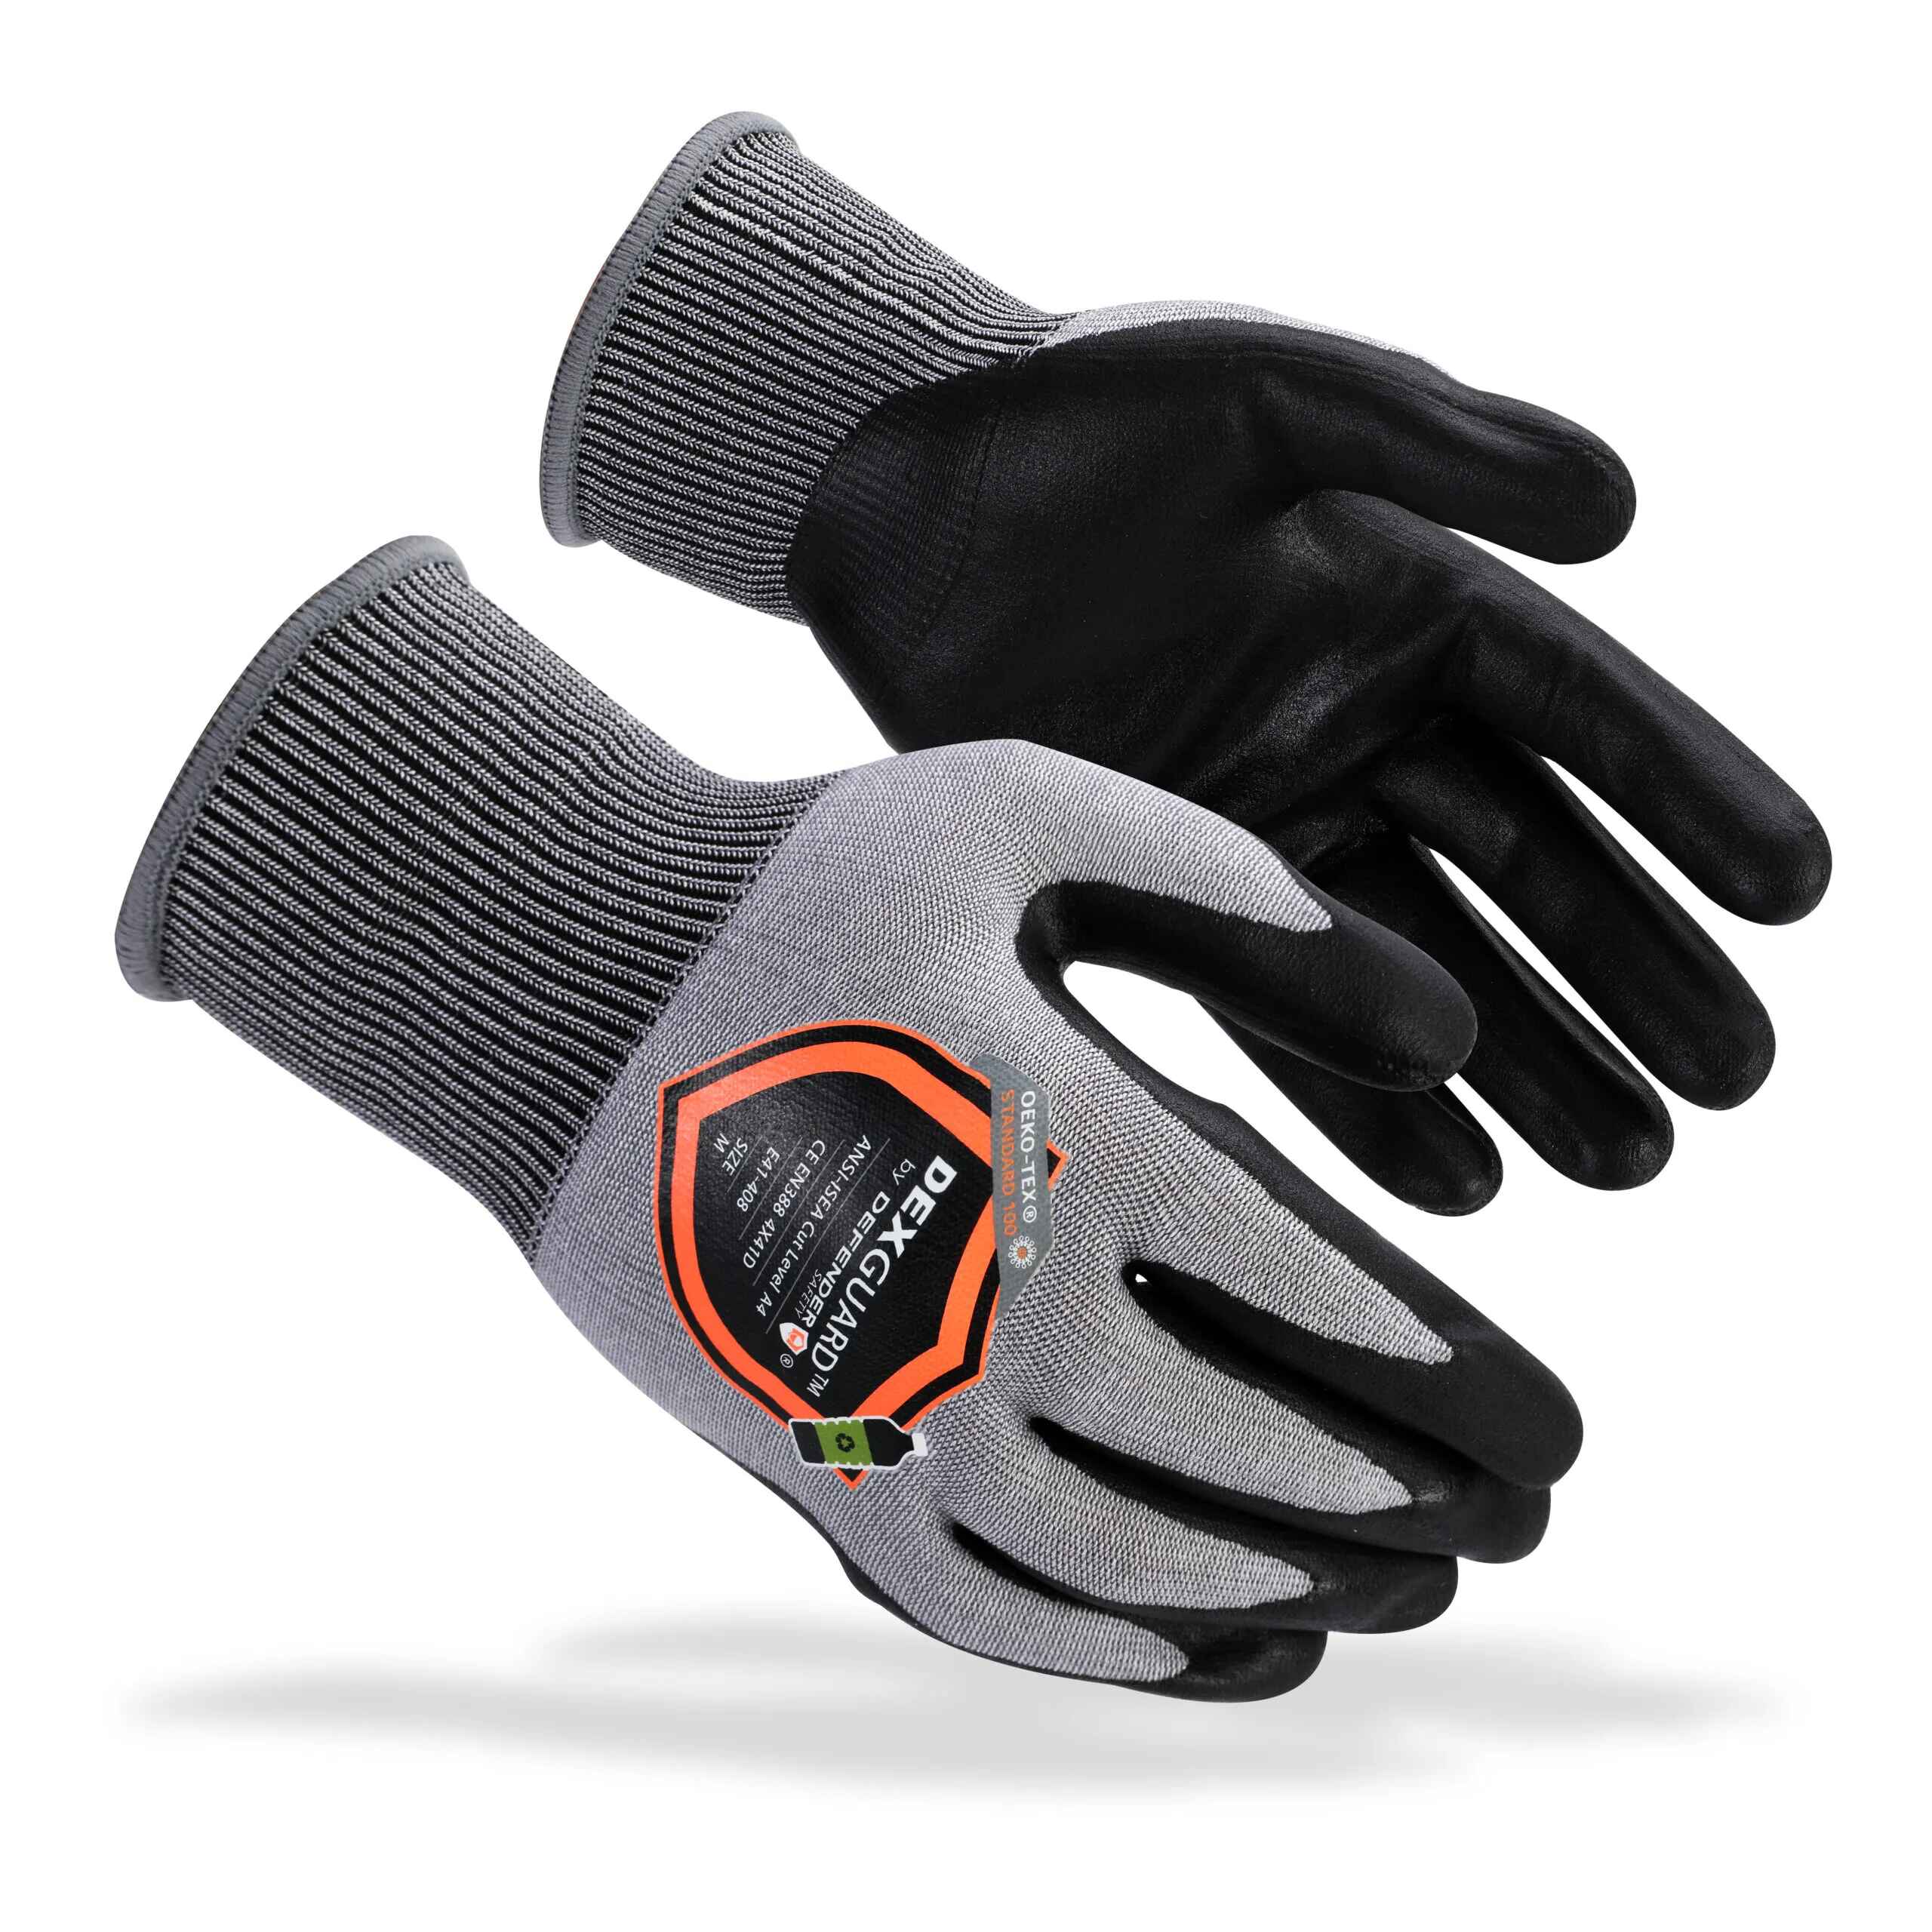 https://cdn.shopify.com/s/files/1/0786/4523/1934/products/dexguard-a4-cut-gloves-level-4-abrasion-resistant-foam-nitrile-coating-688148.jpg?v=1690825170&width=2560